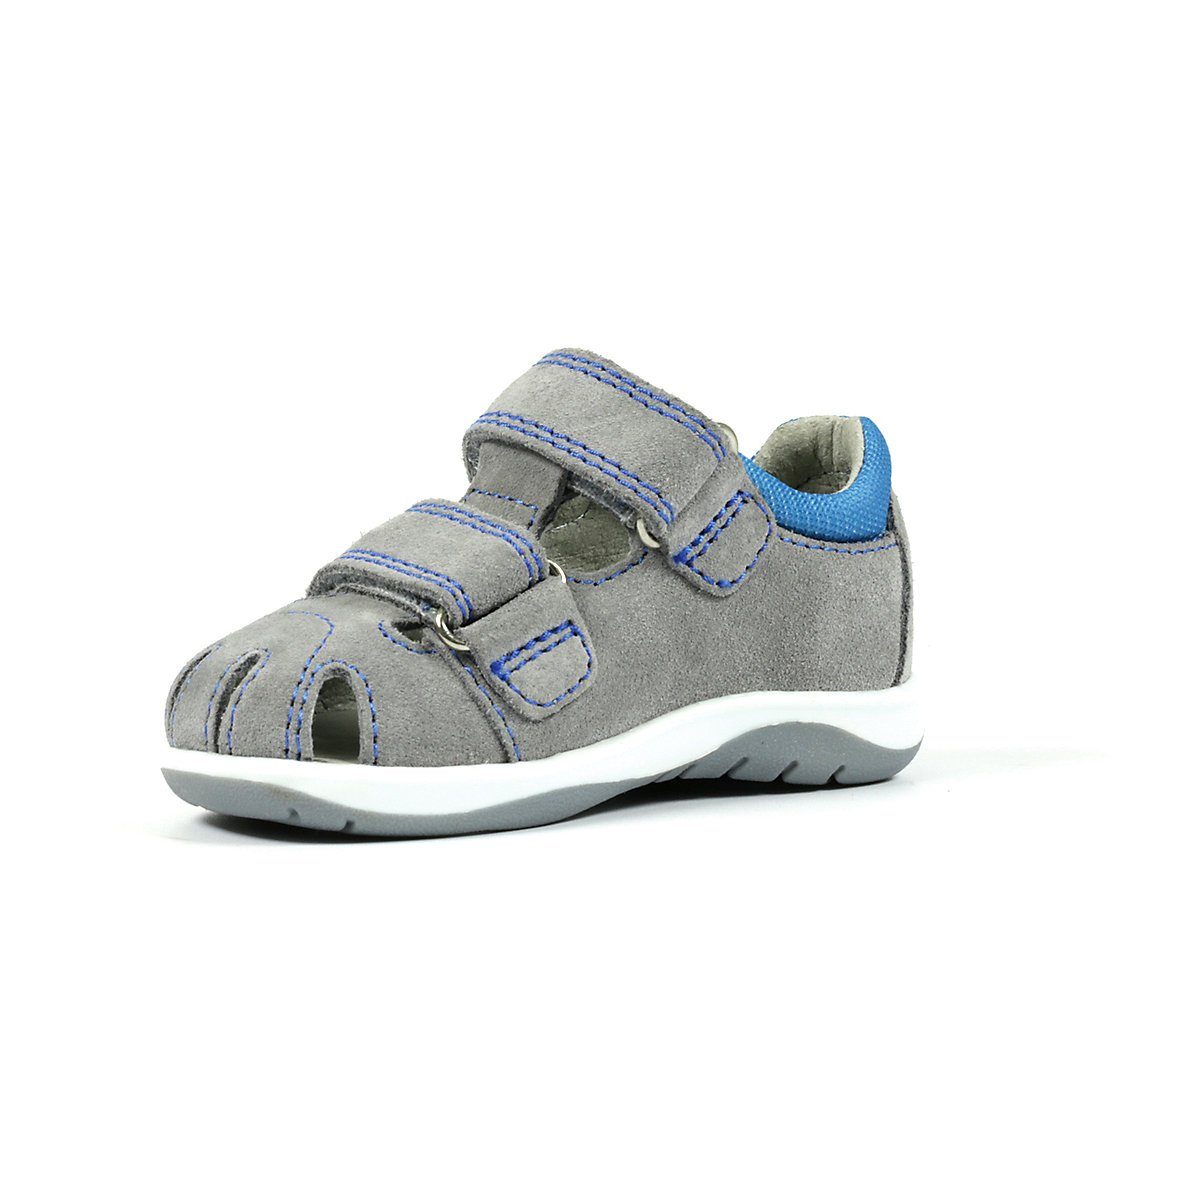 Schuhe Babyschuhe Jungen Richter Baby Sandalen für Jungen Sandale